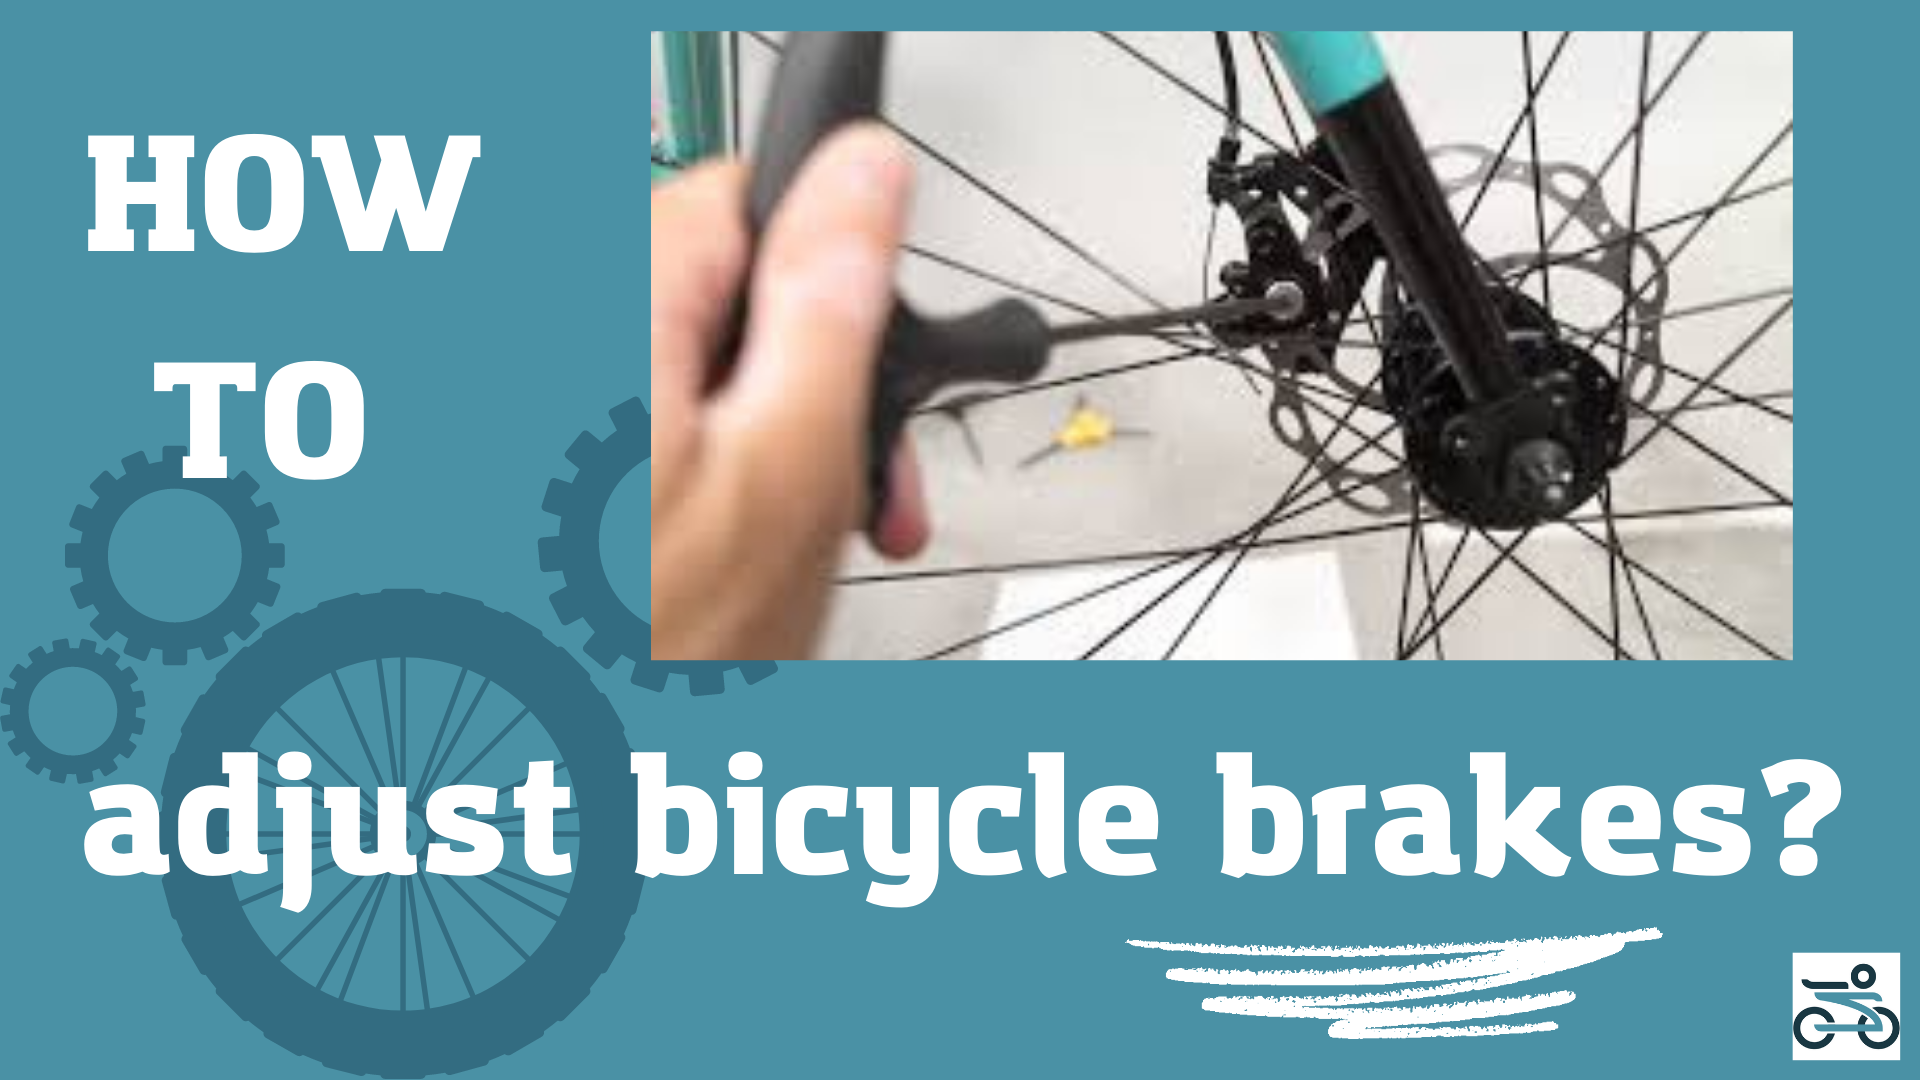 How to adjust bicycle brakes? - In 5 simple steps